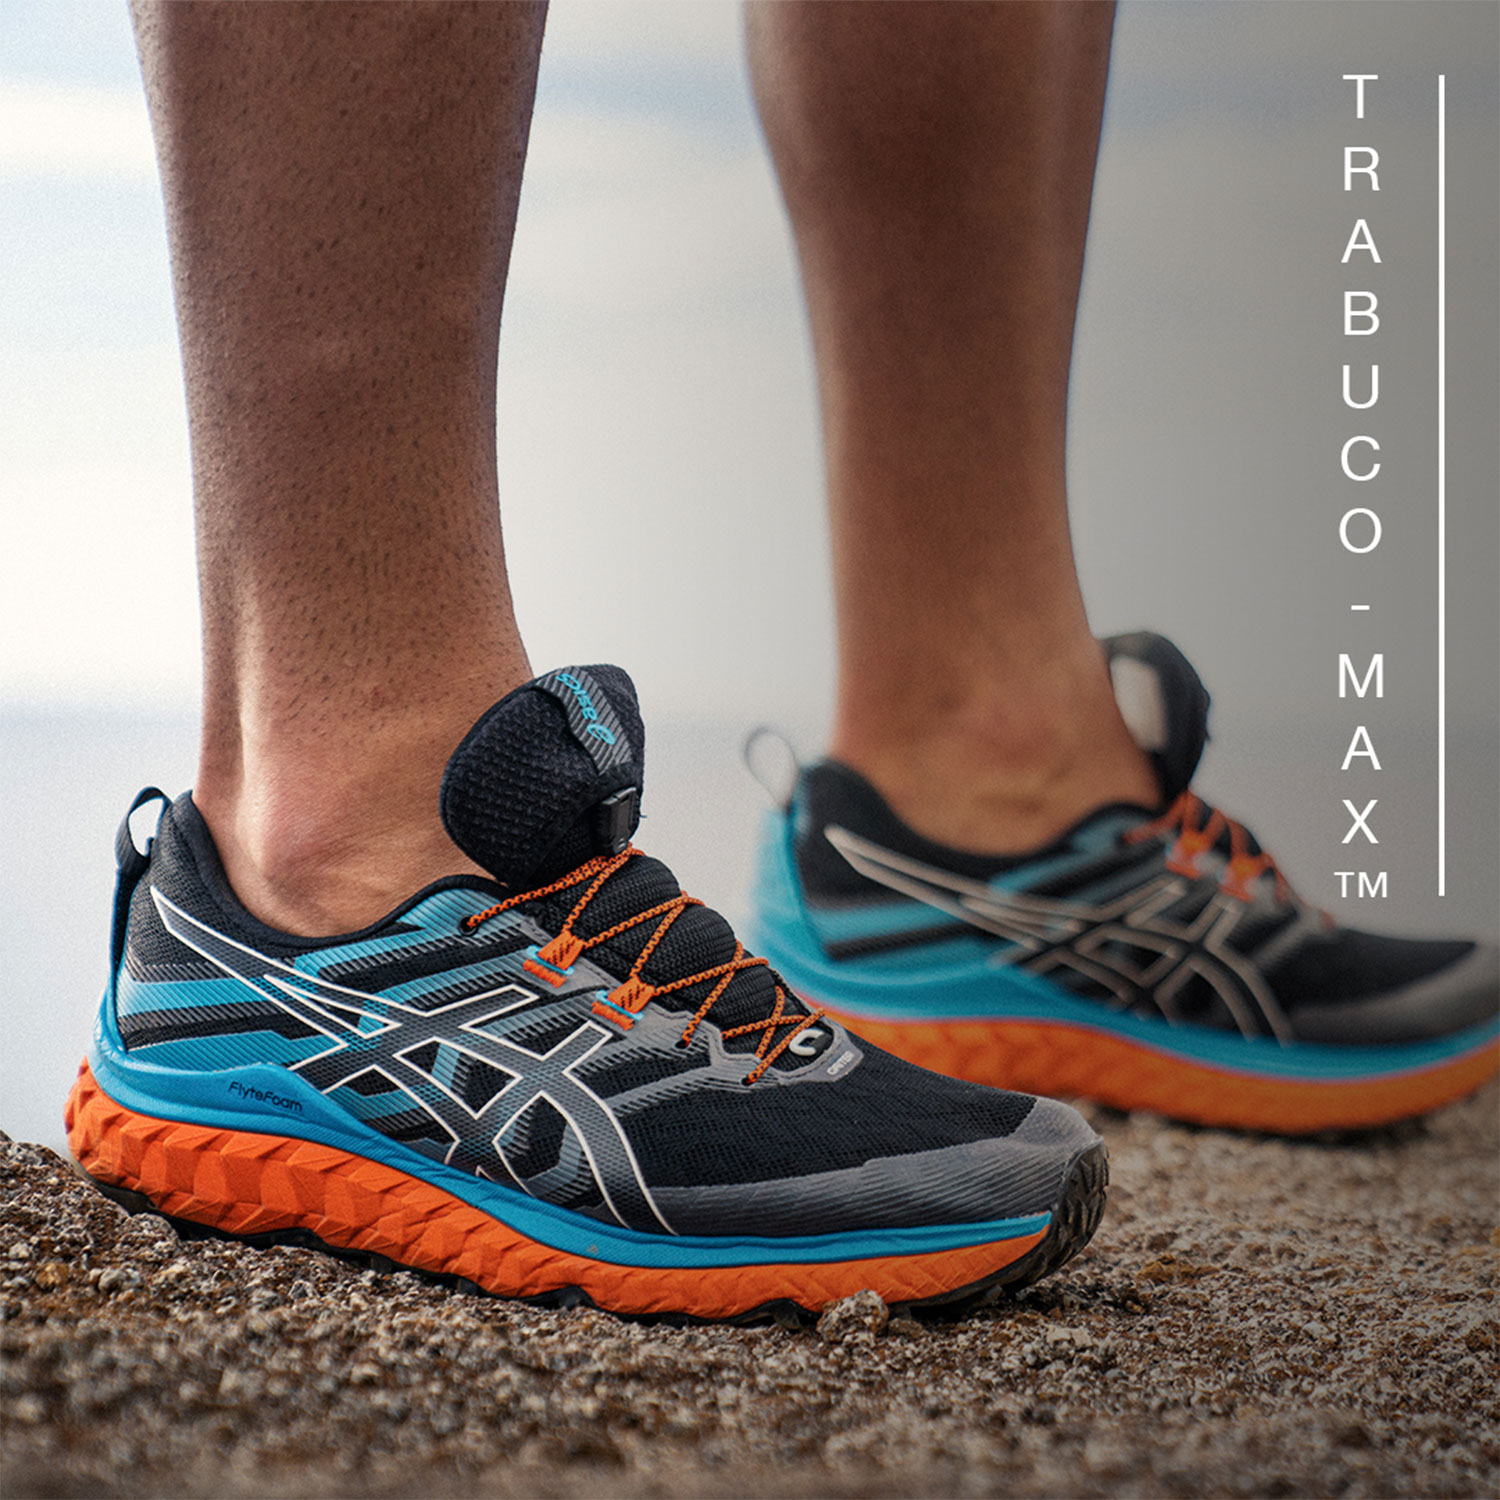 Asics Trabuco Max Men's Trail Running Shoes - Black/Digital Aqua